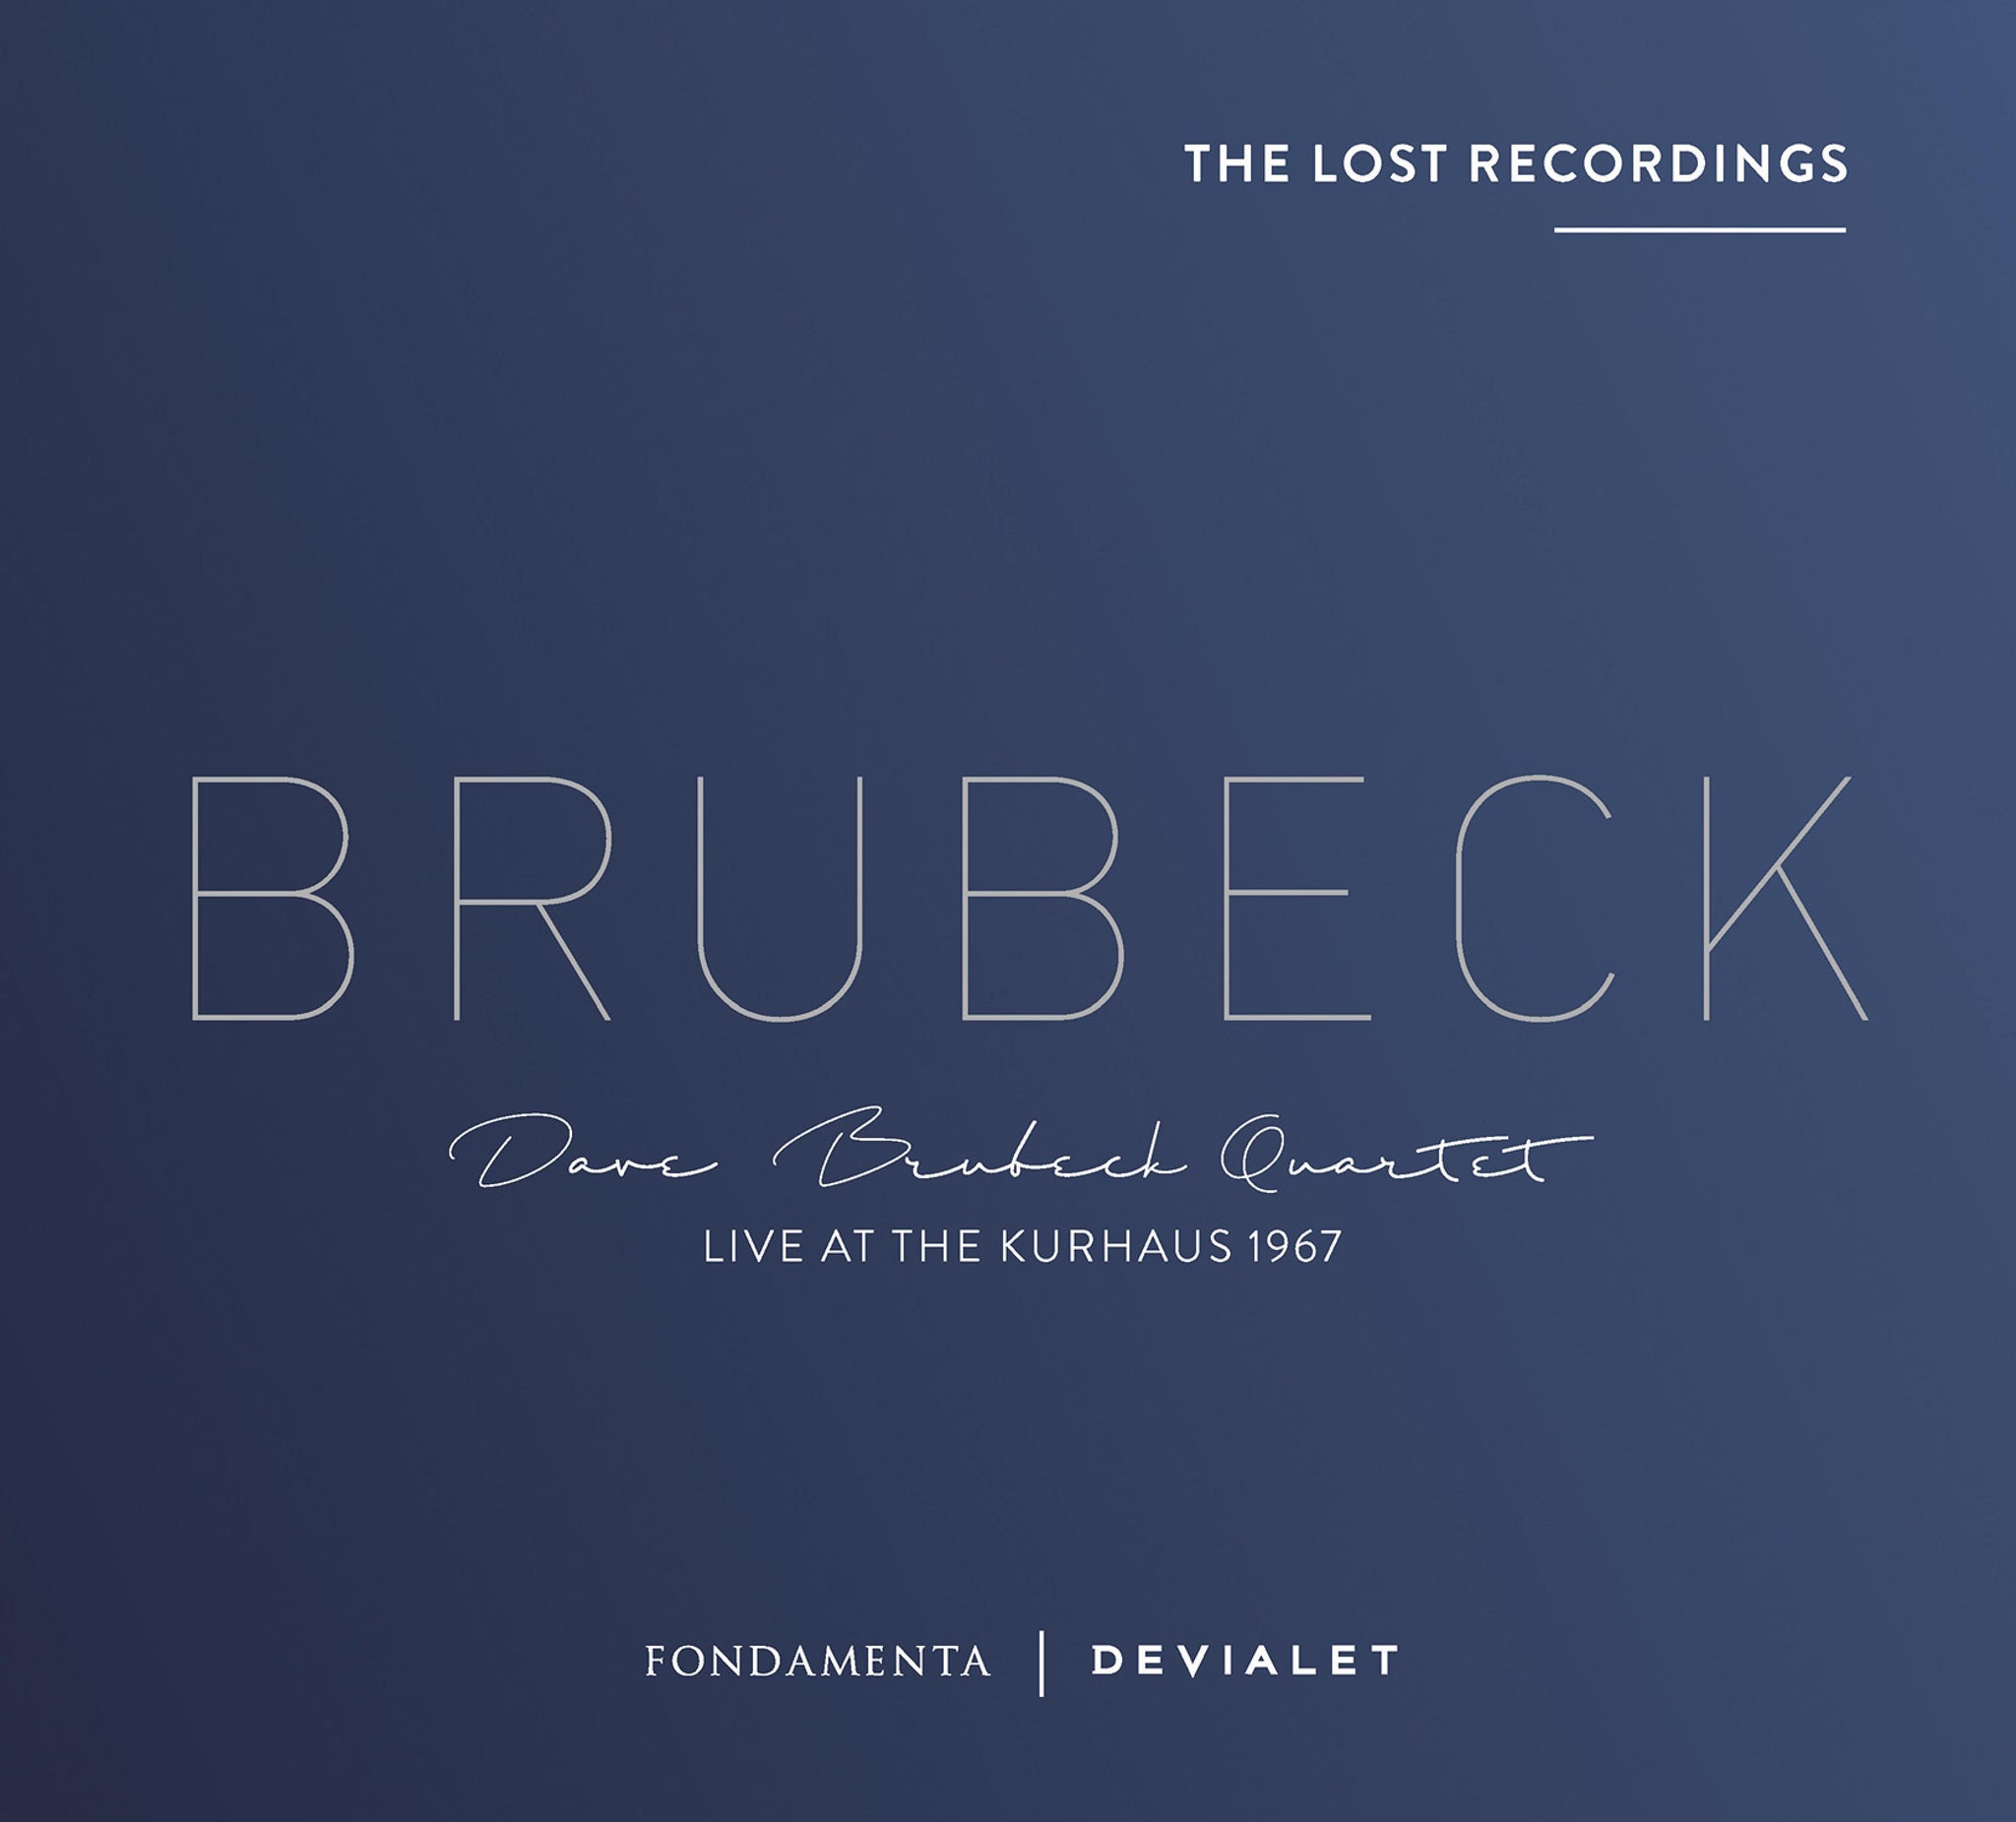 Live at the Kurhaus 1967 / Dave Brubeck Quartet